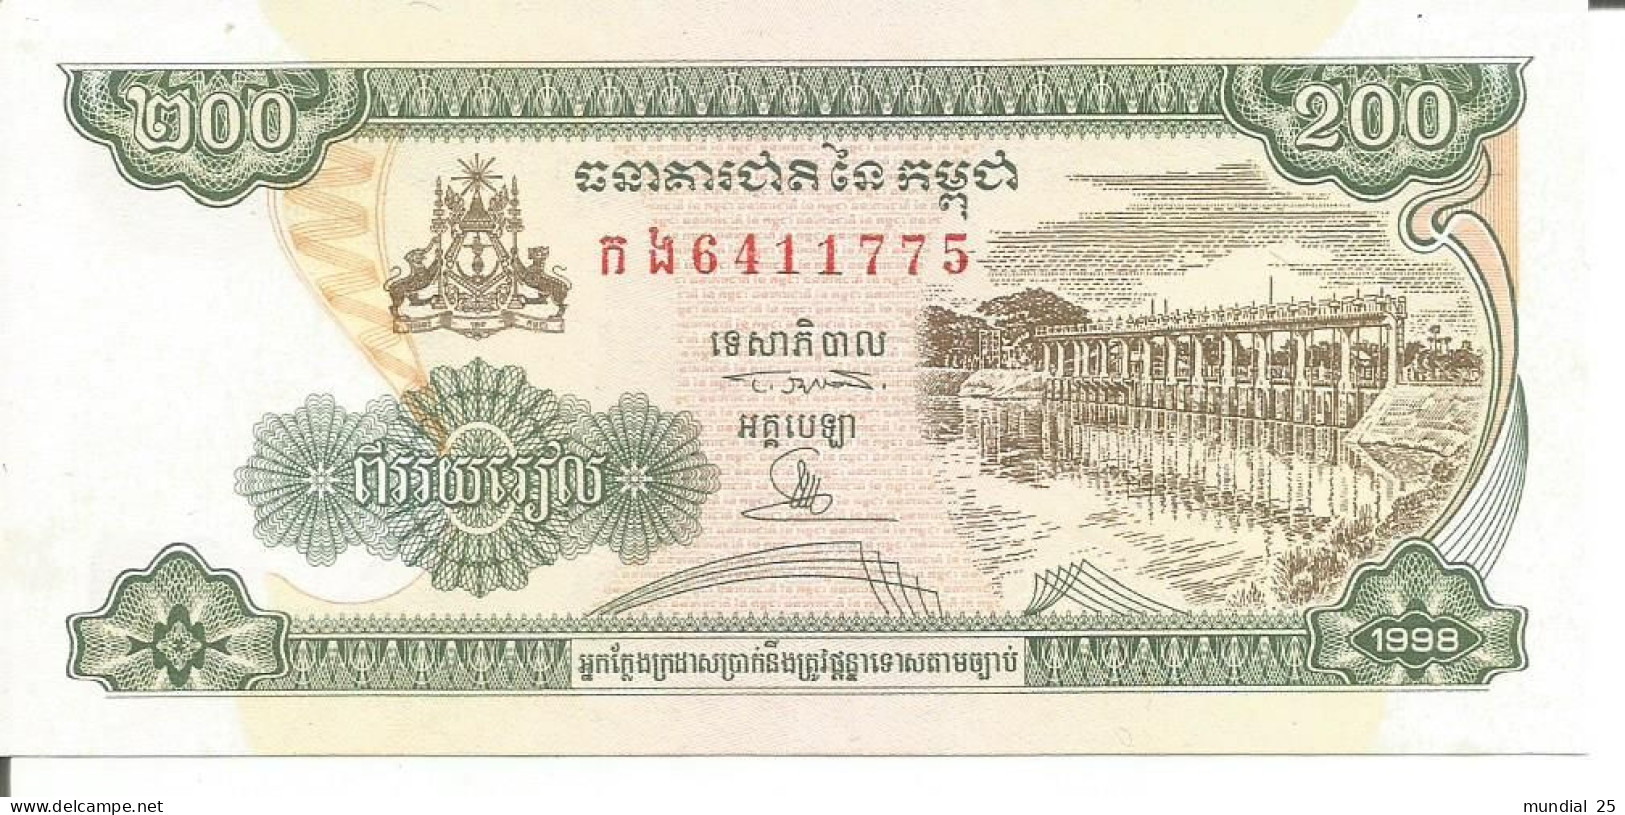 2 CAMBODIA NOTES 200 RIELS 1998 - Kambodscha